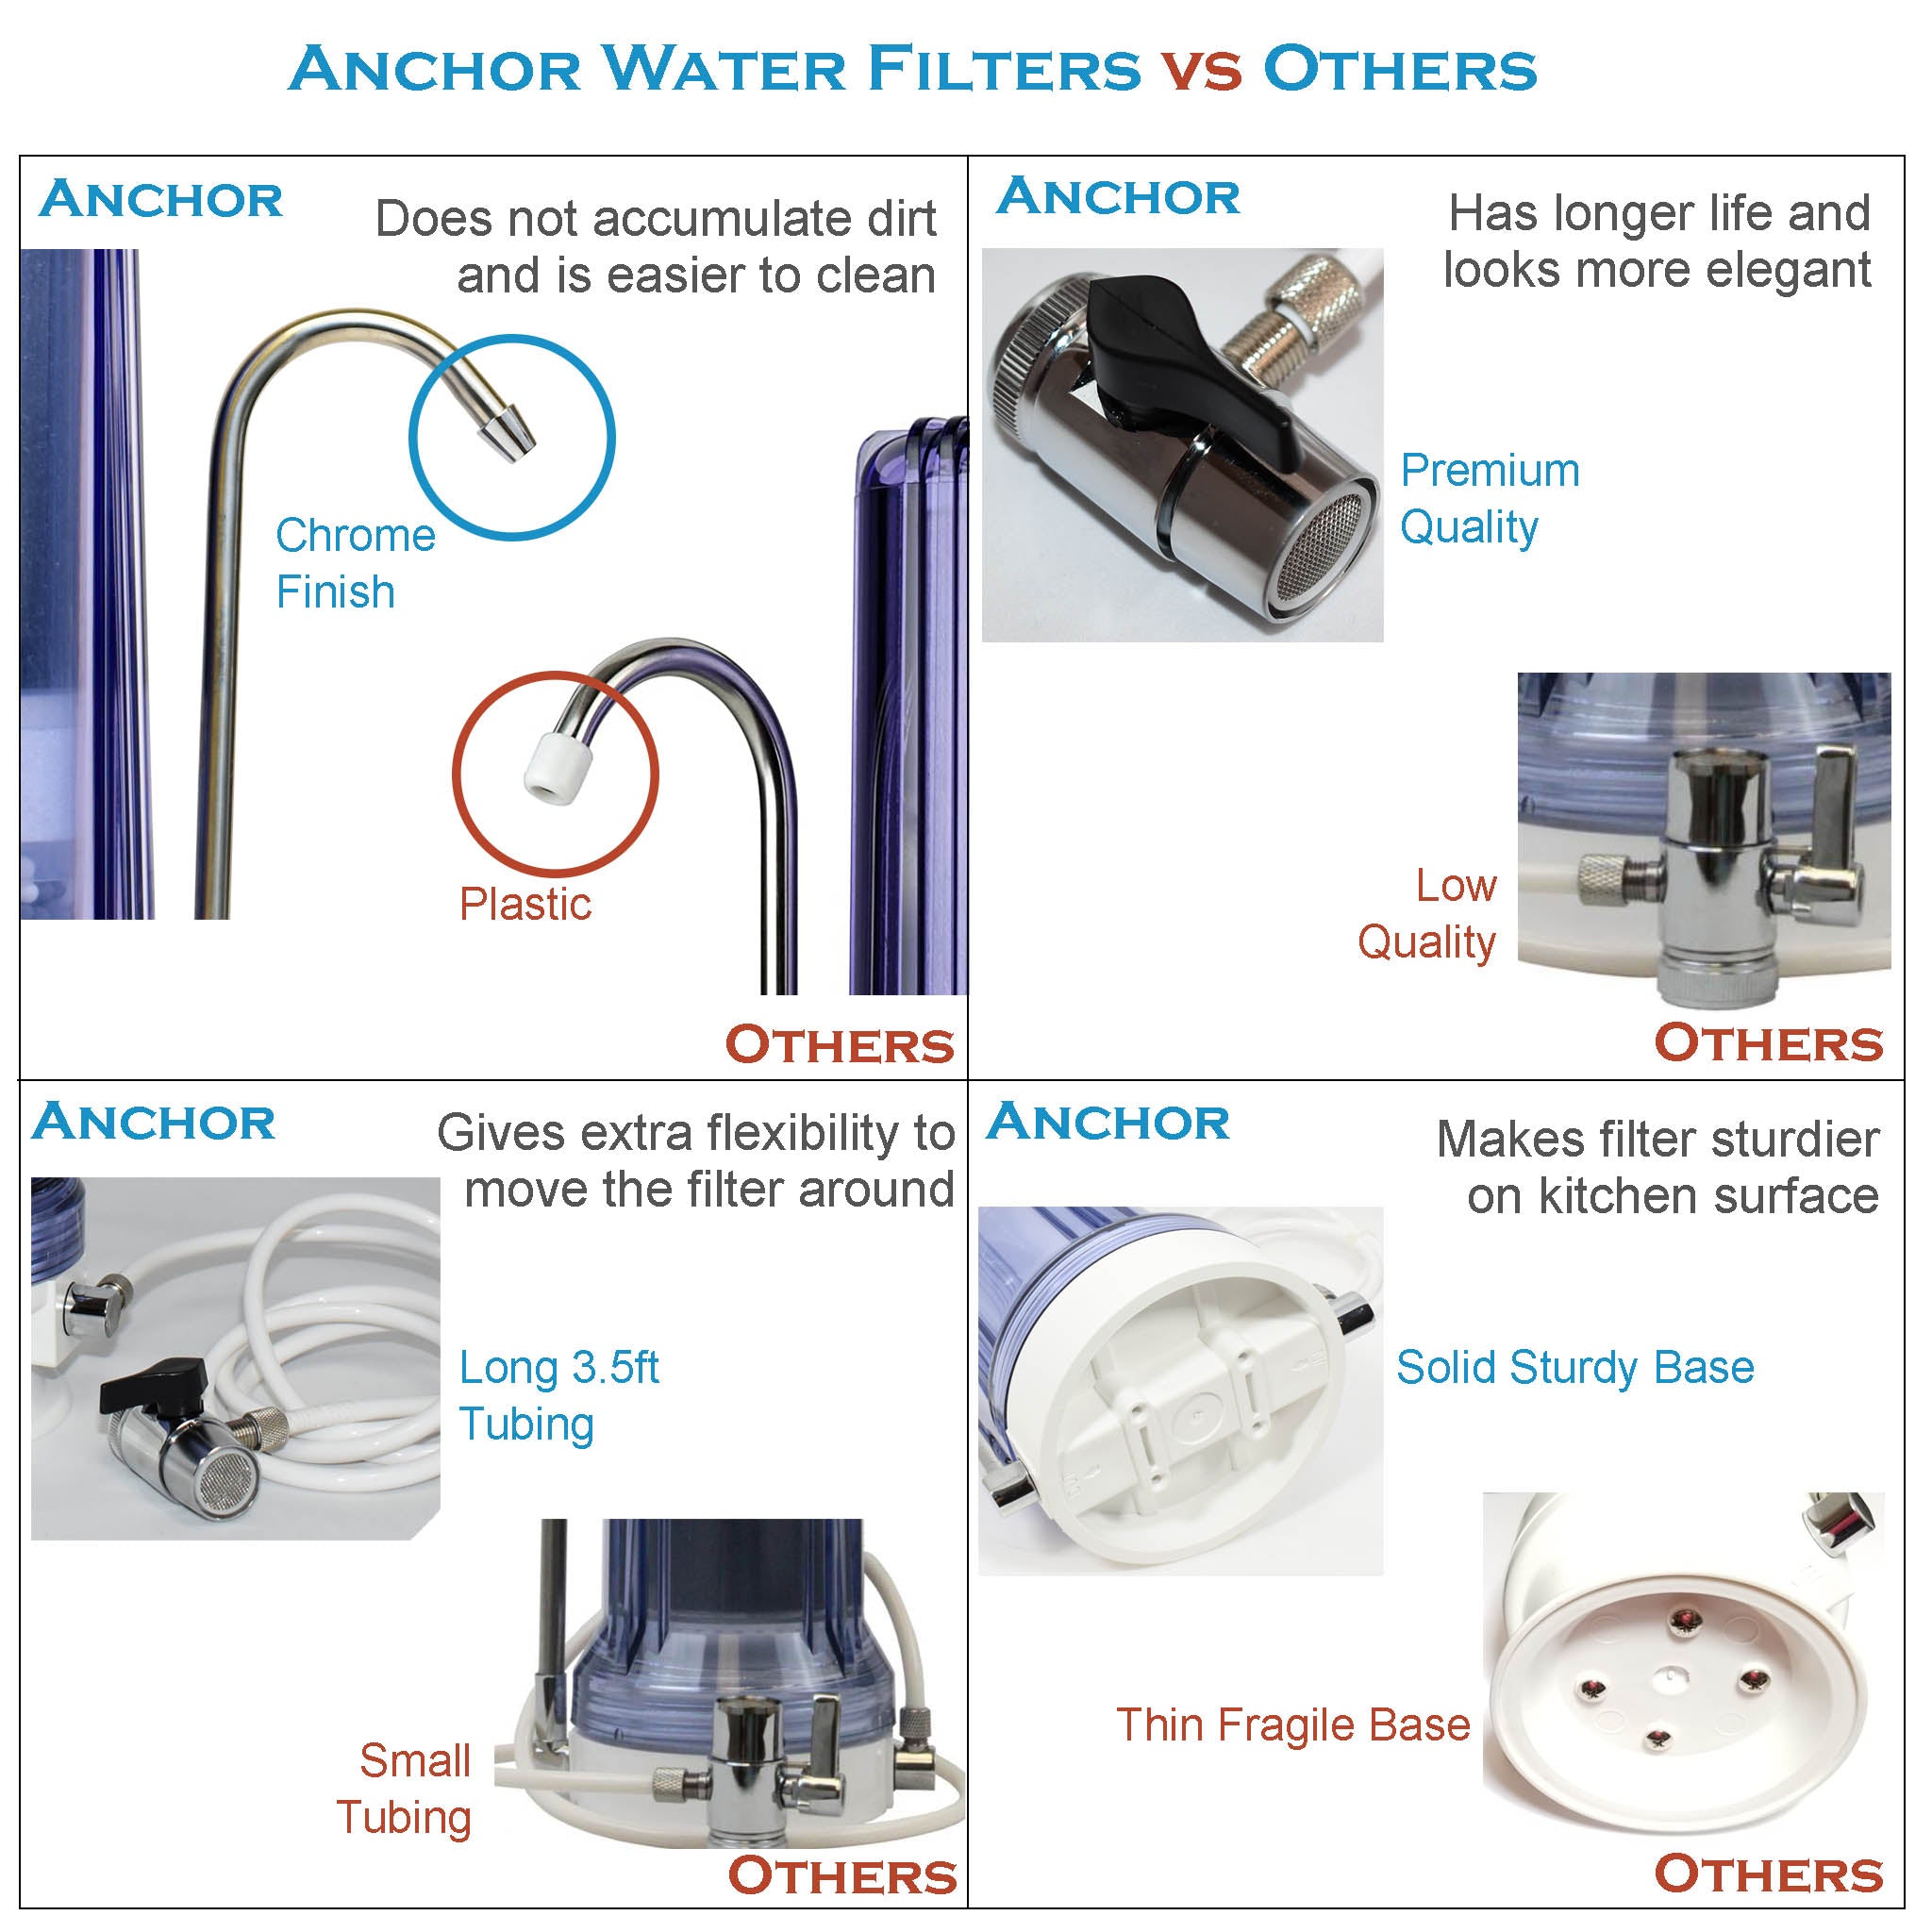 AF-3700 - 7-Stage Alkaline Anti-Oxidizing Countertop Filter